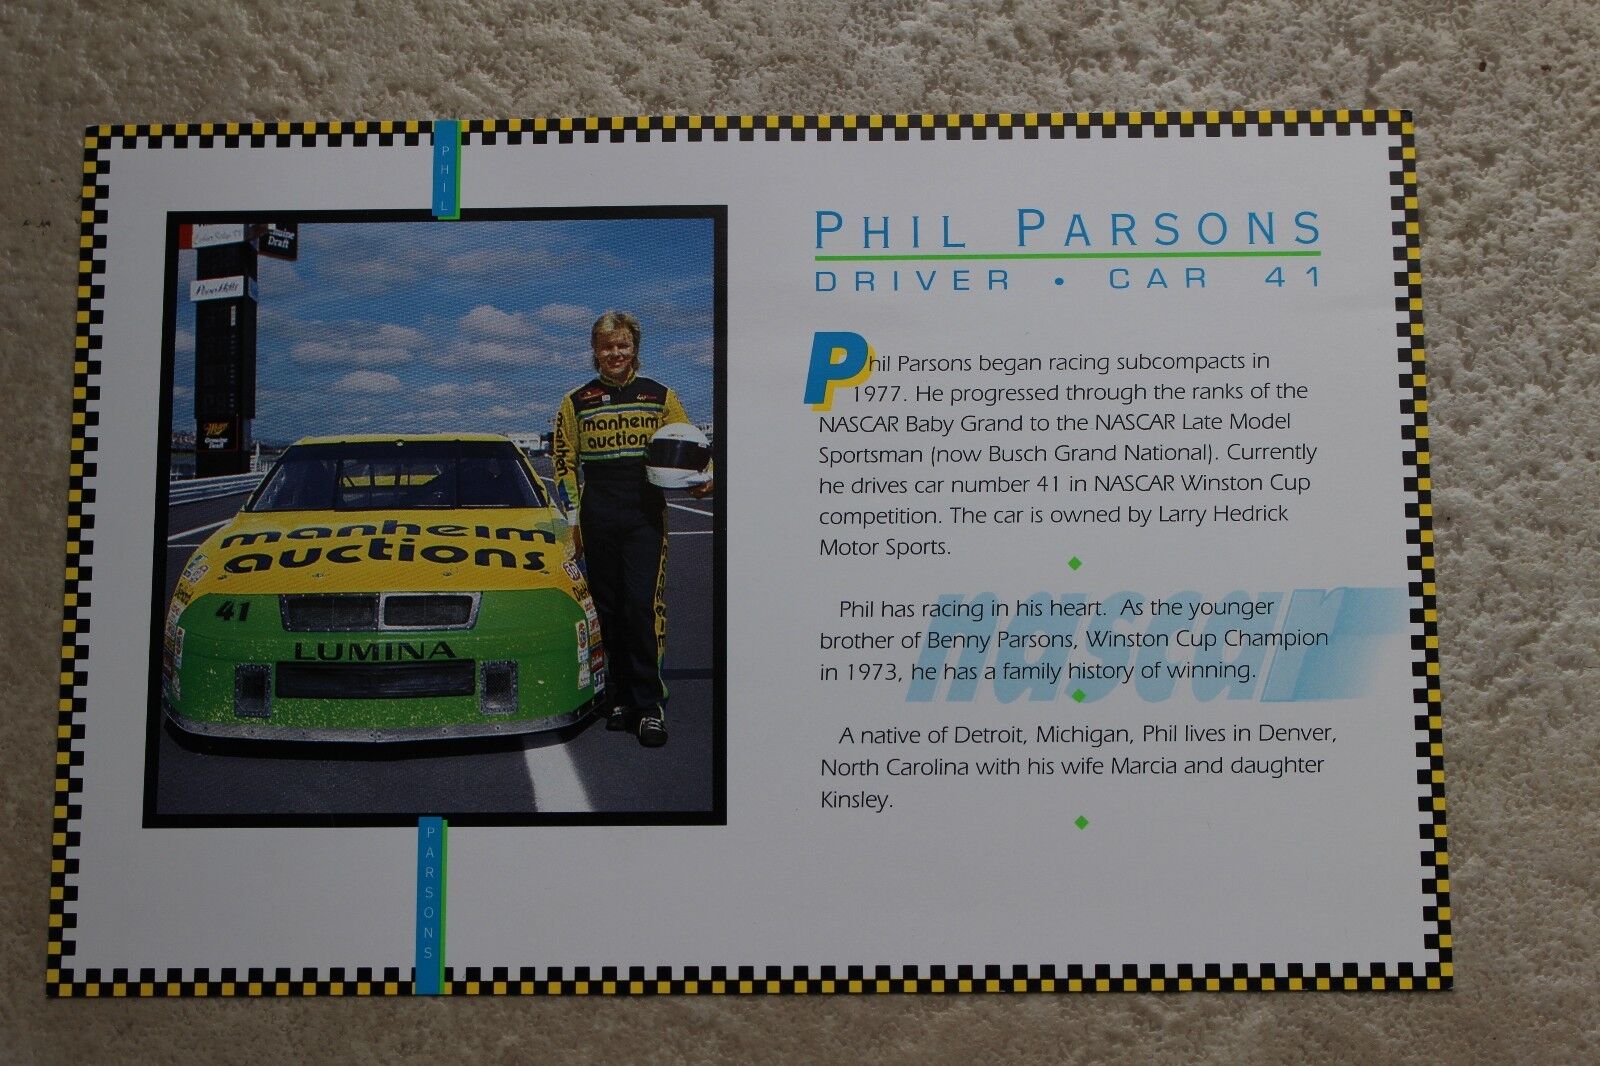 Phil Parsons Manheim Auctions Cash special price Hero Alternative dealer card Ch 1993 NASCAR - #41